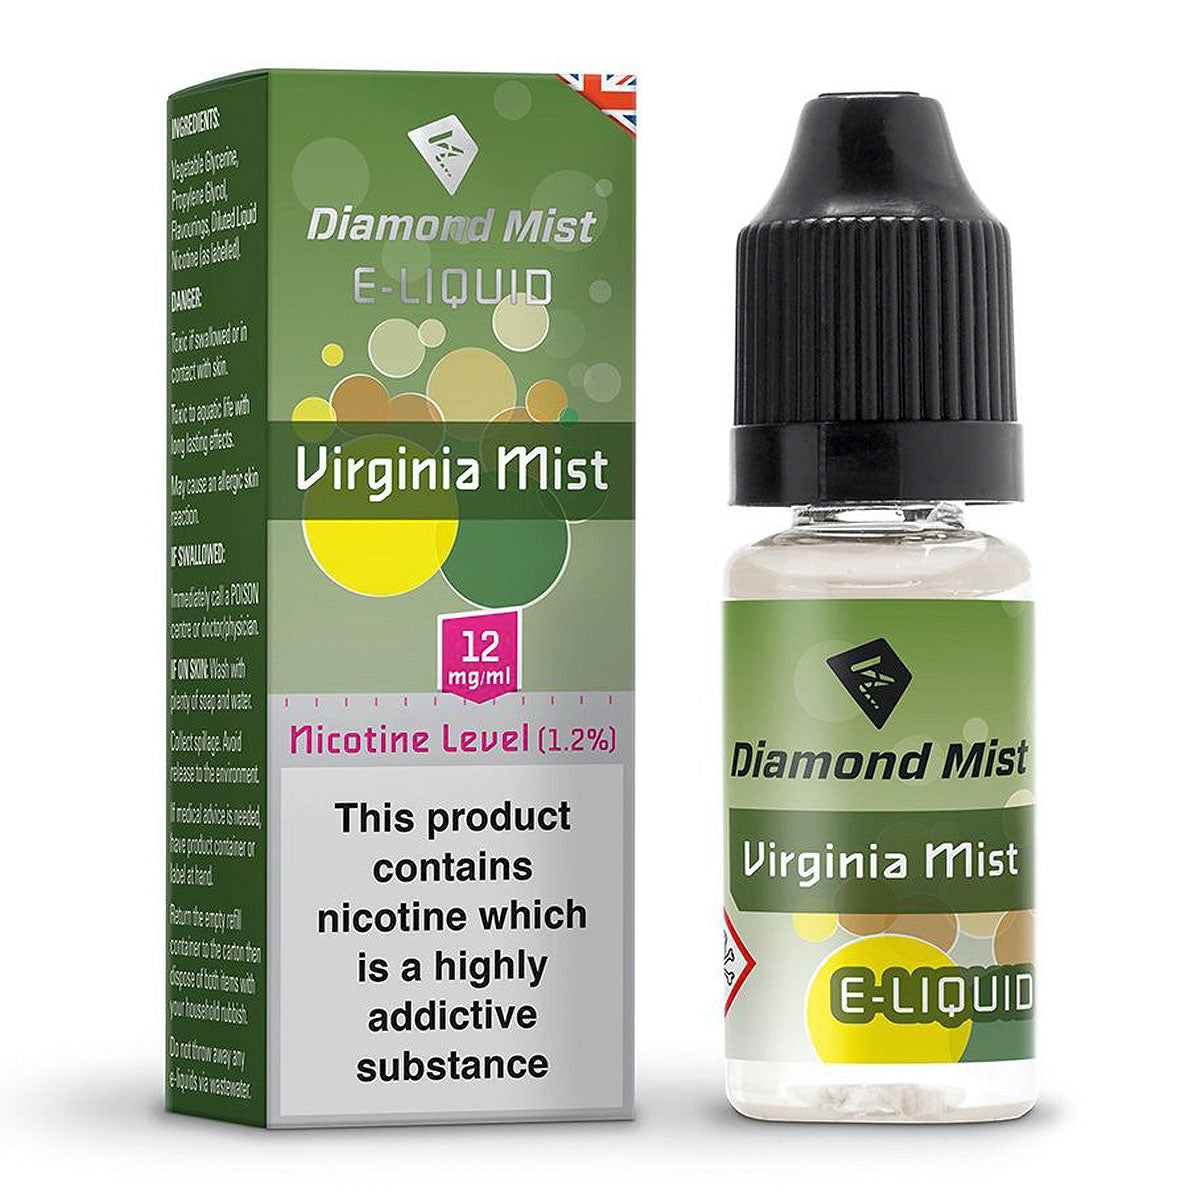 Virginia Mist 10ml by Diamond Mist